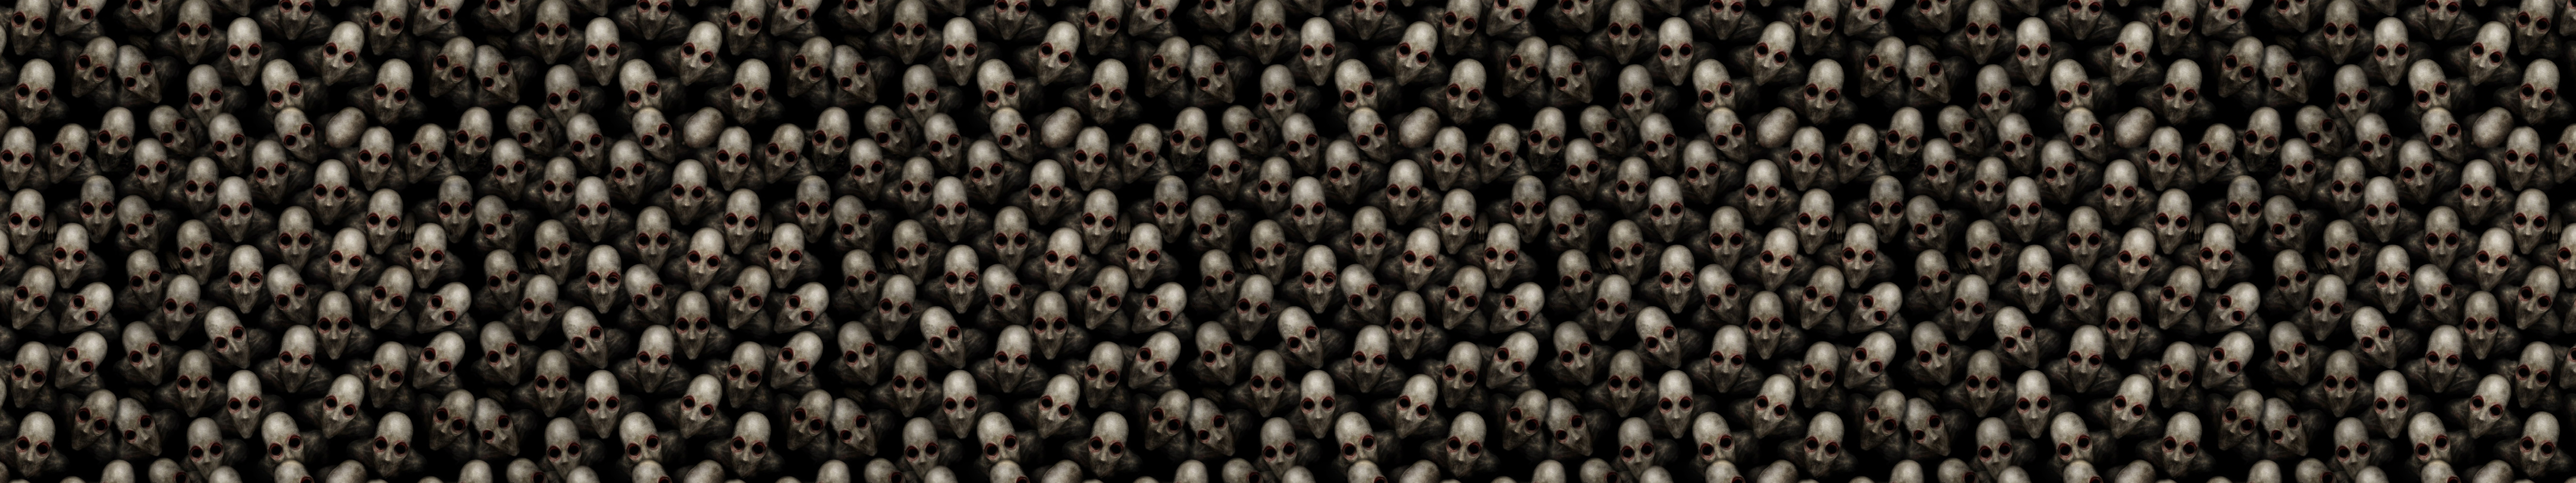 Dark Creepy HD Wallpaper Background Image